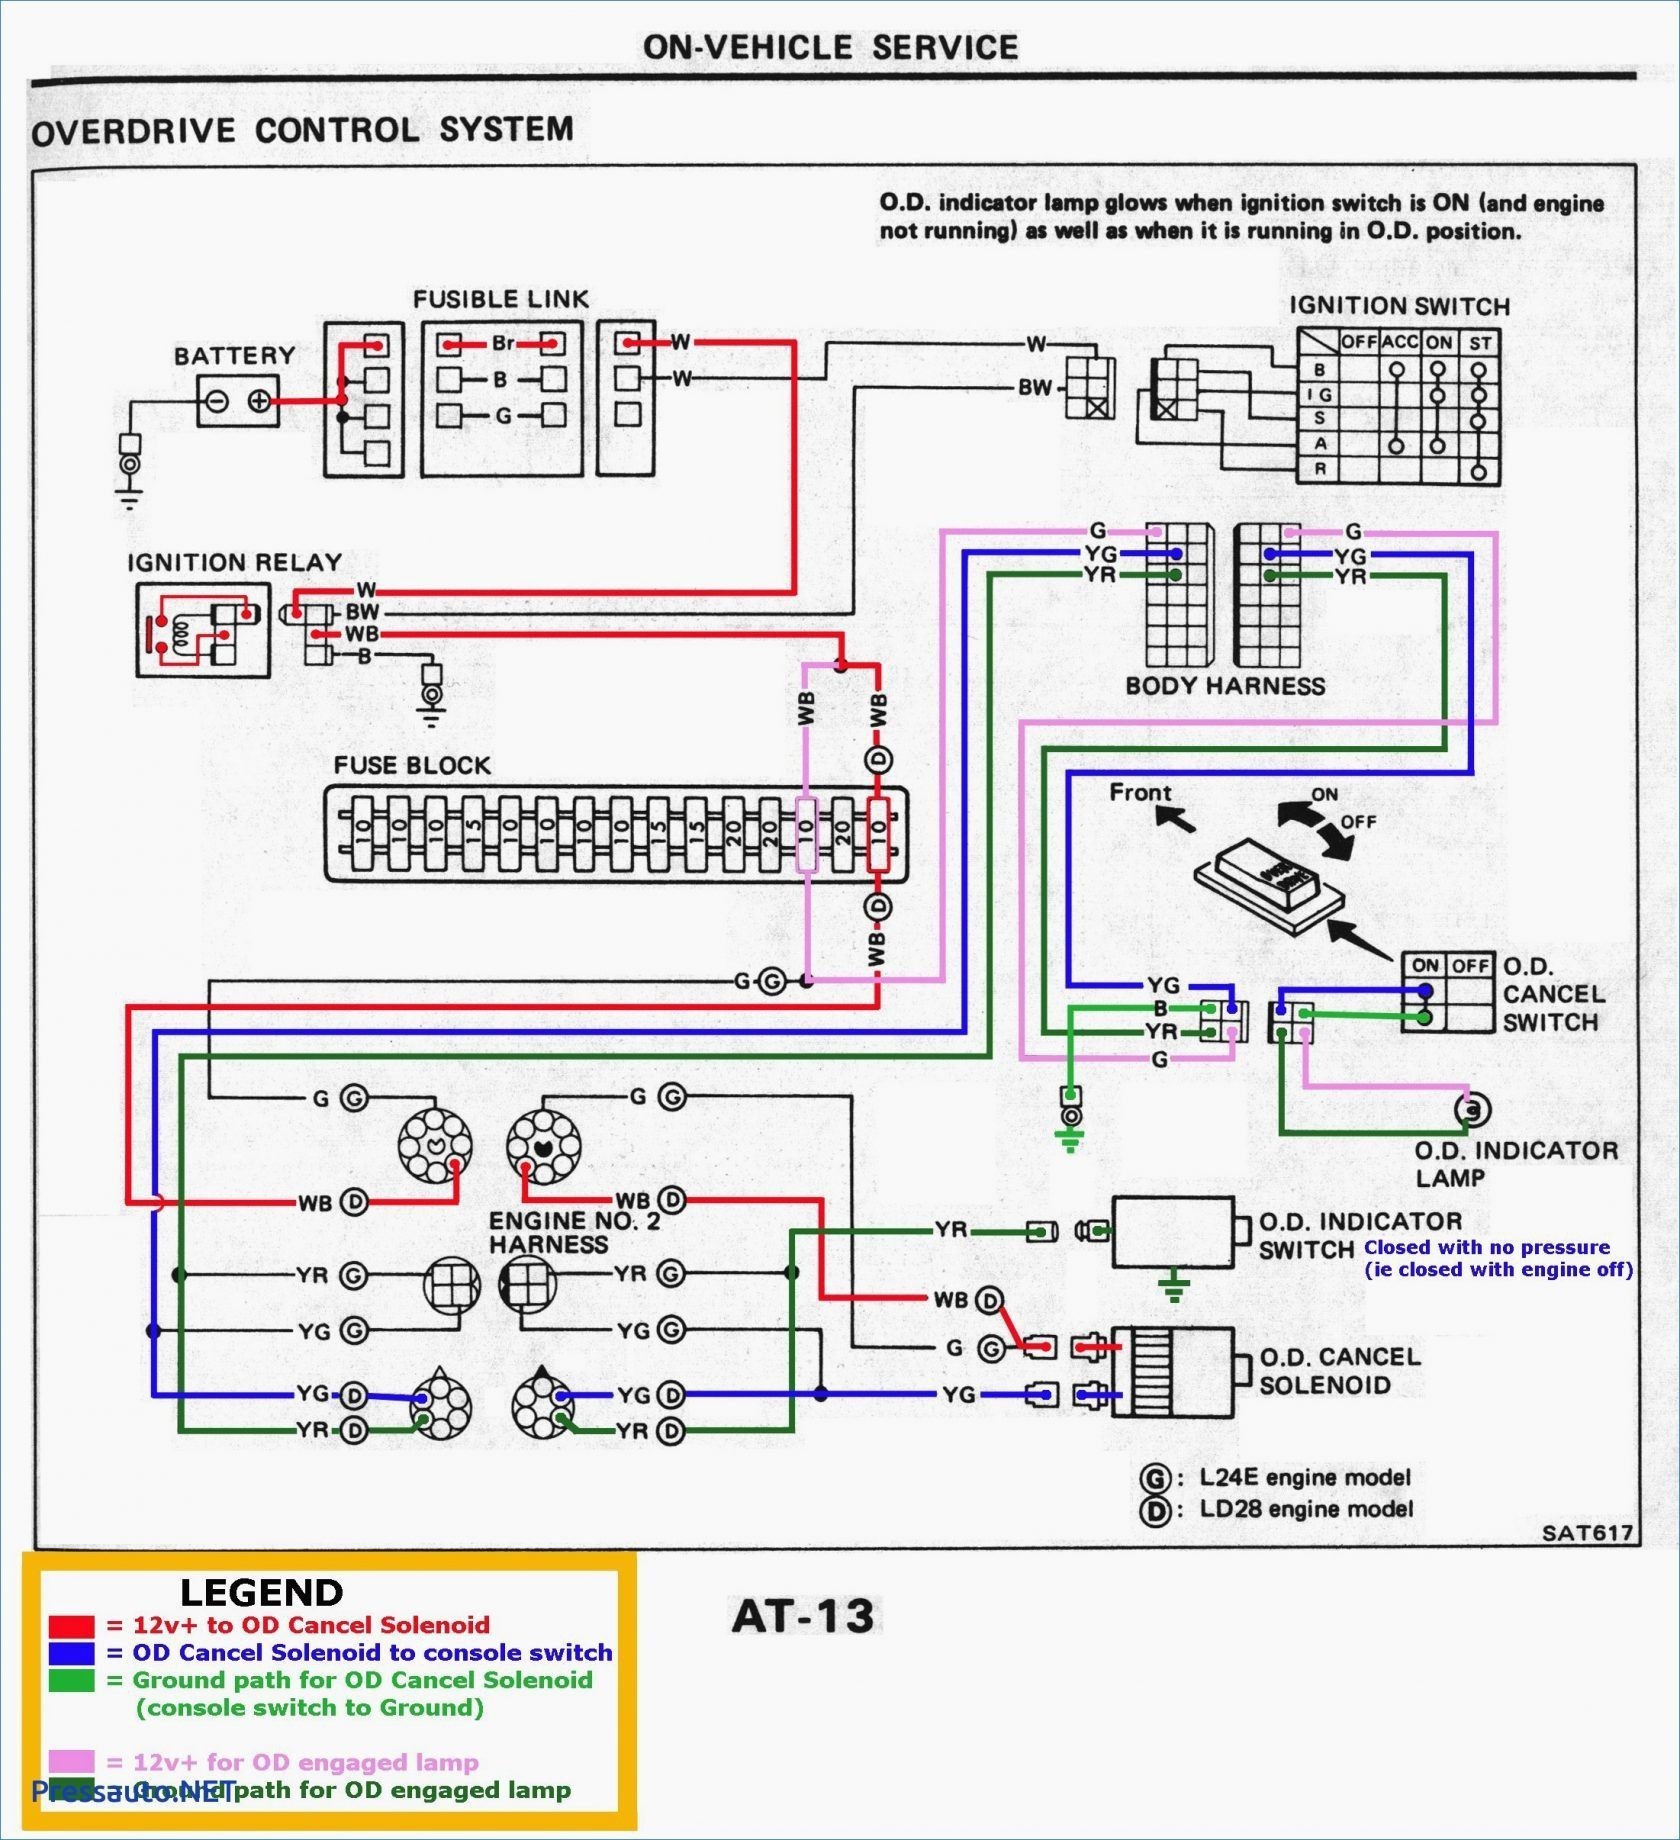 Ac Wiring Diagram thermostat A C Wiring Diagram Wiring Diagram Datasource Of Ac Wiring Diagram thermostat